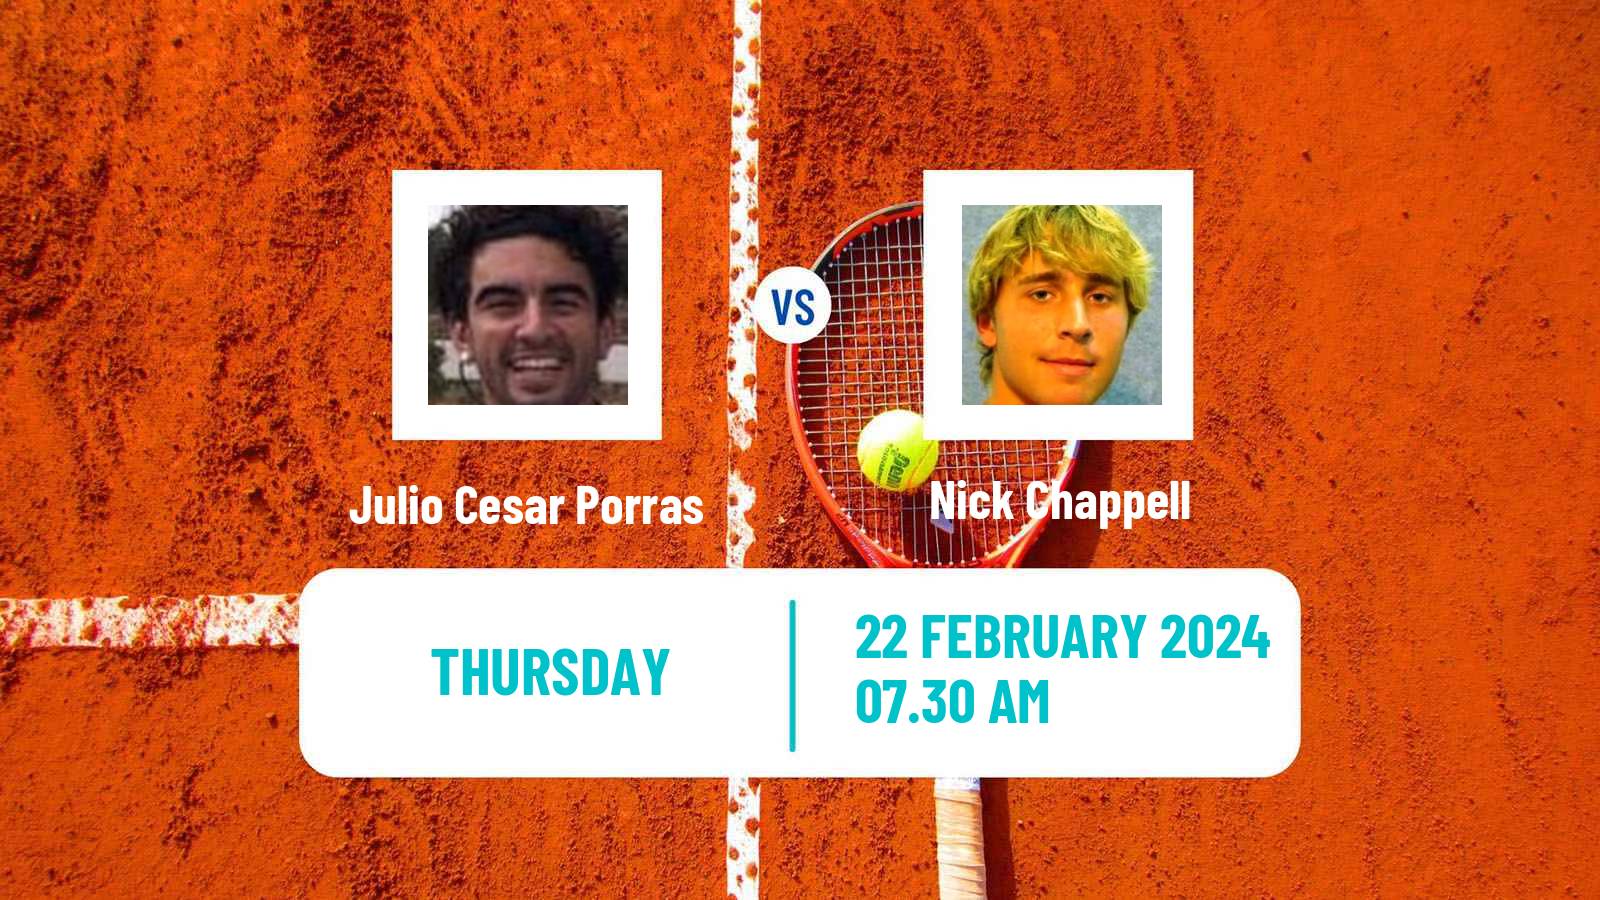 Tennis ITF M25 Vila Real De Santo Antonio 2 Men Julio Cesar Porras - Nick Chappell